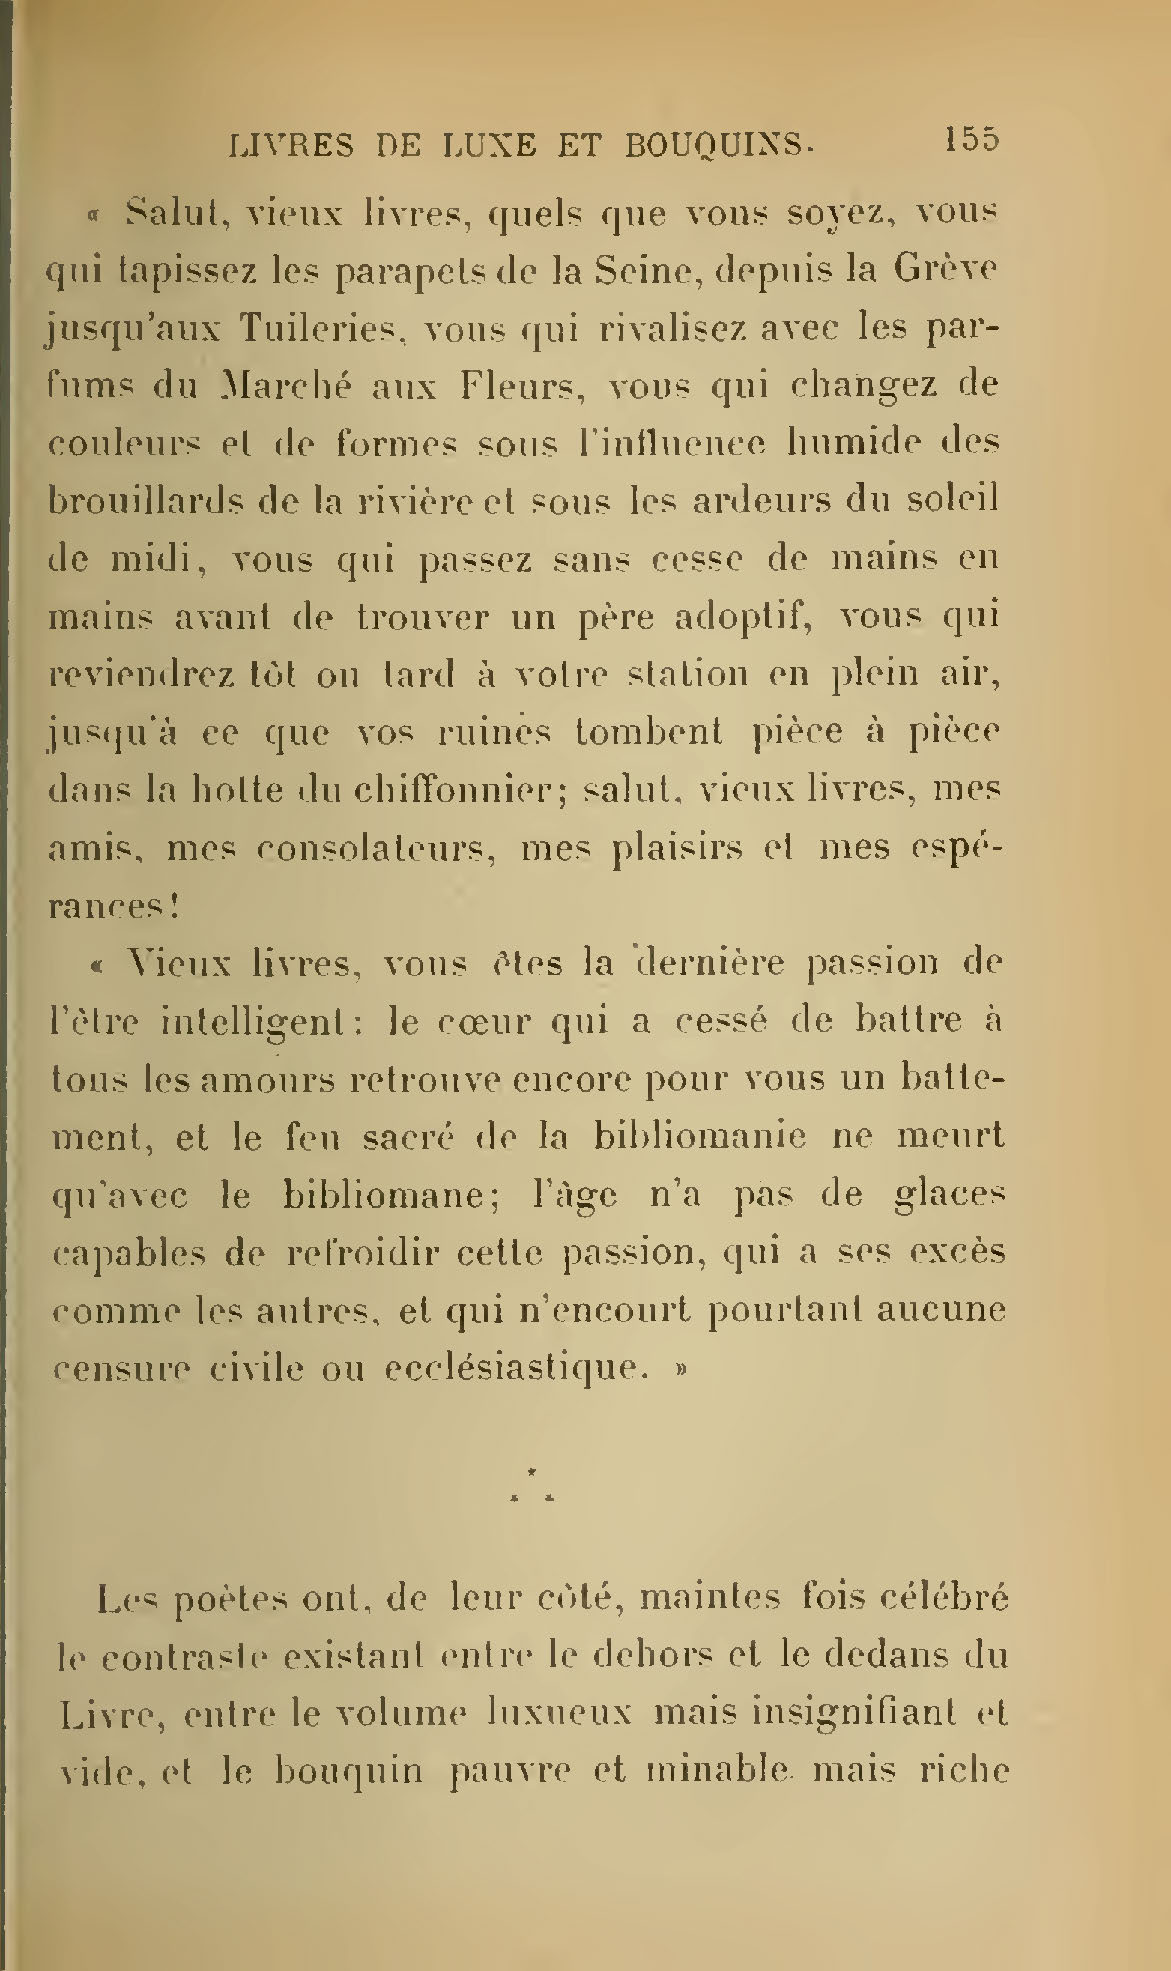 Albert Cim, Le Livre, t. II, p. 155.